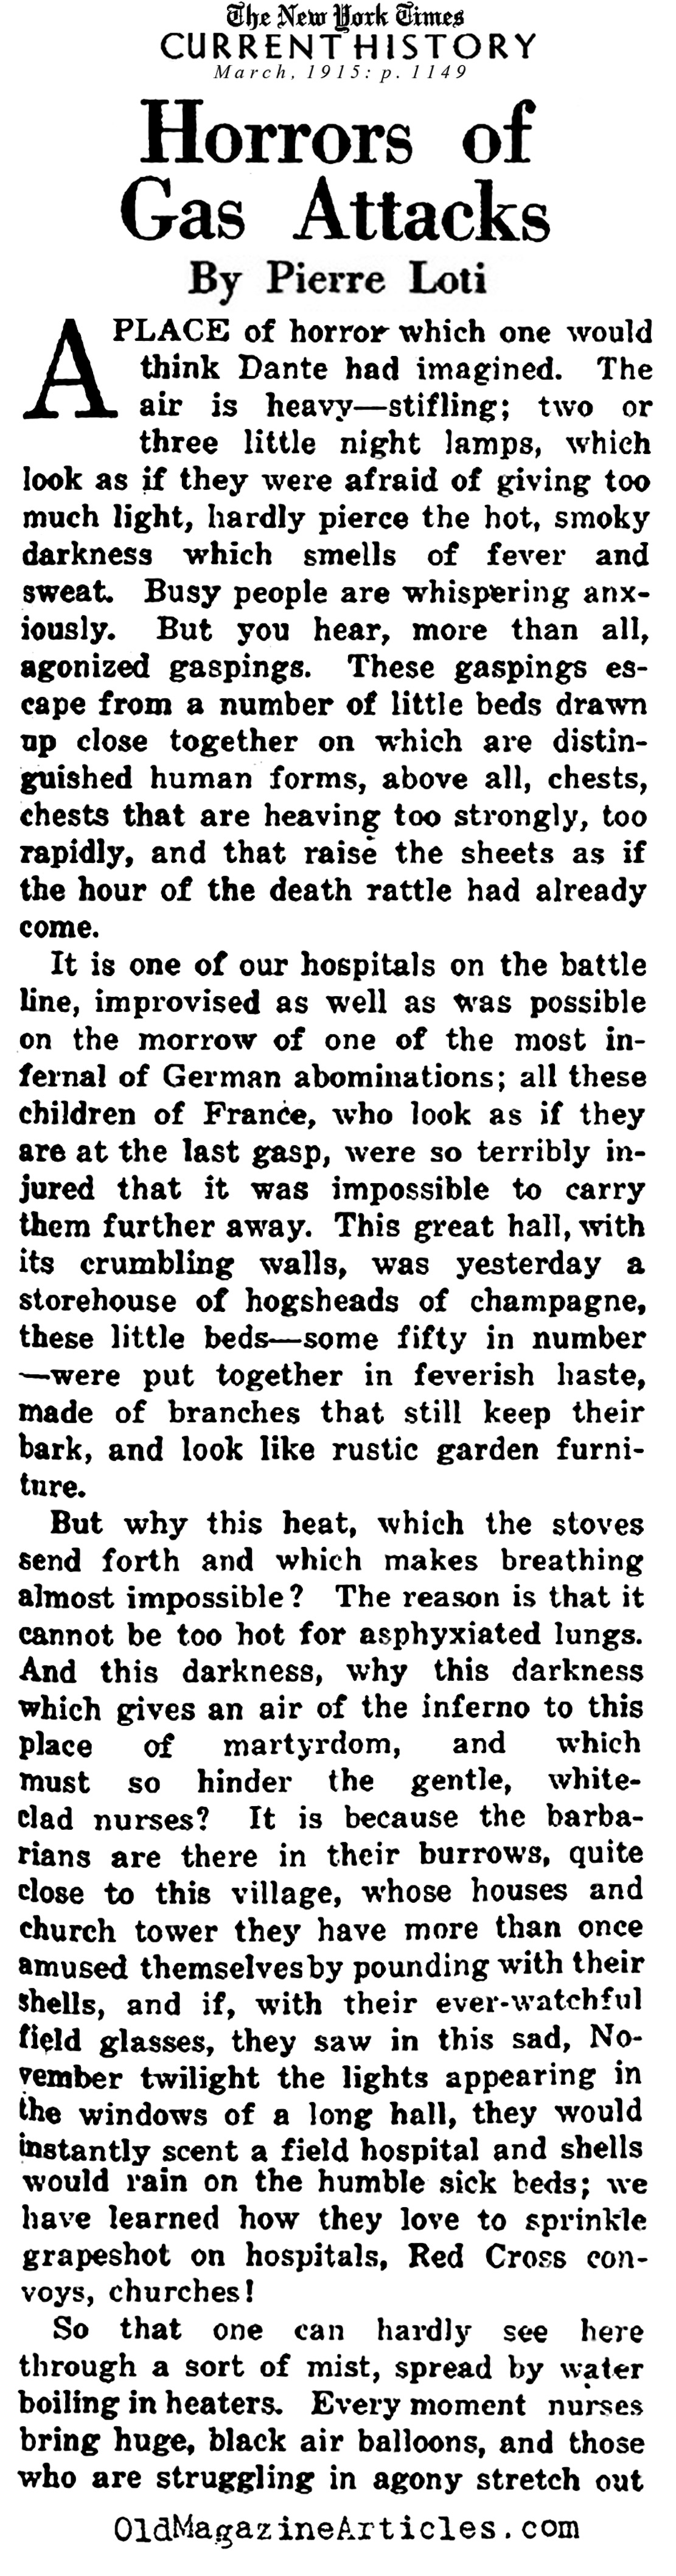 Gas Attack Horrors (NY Times, 1915)